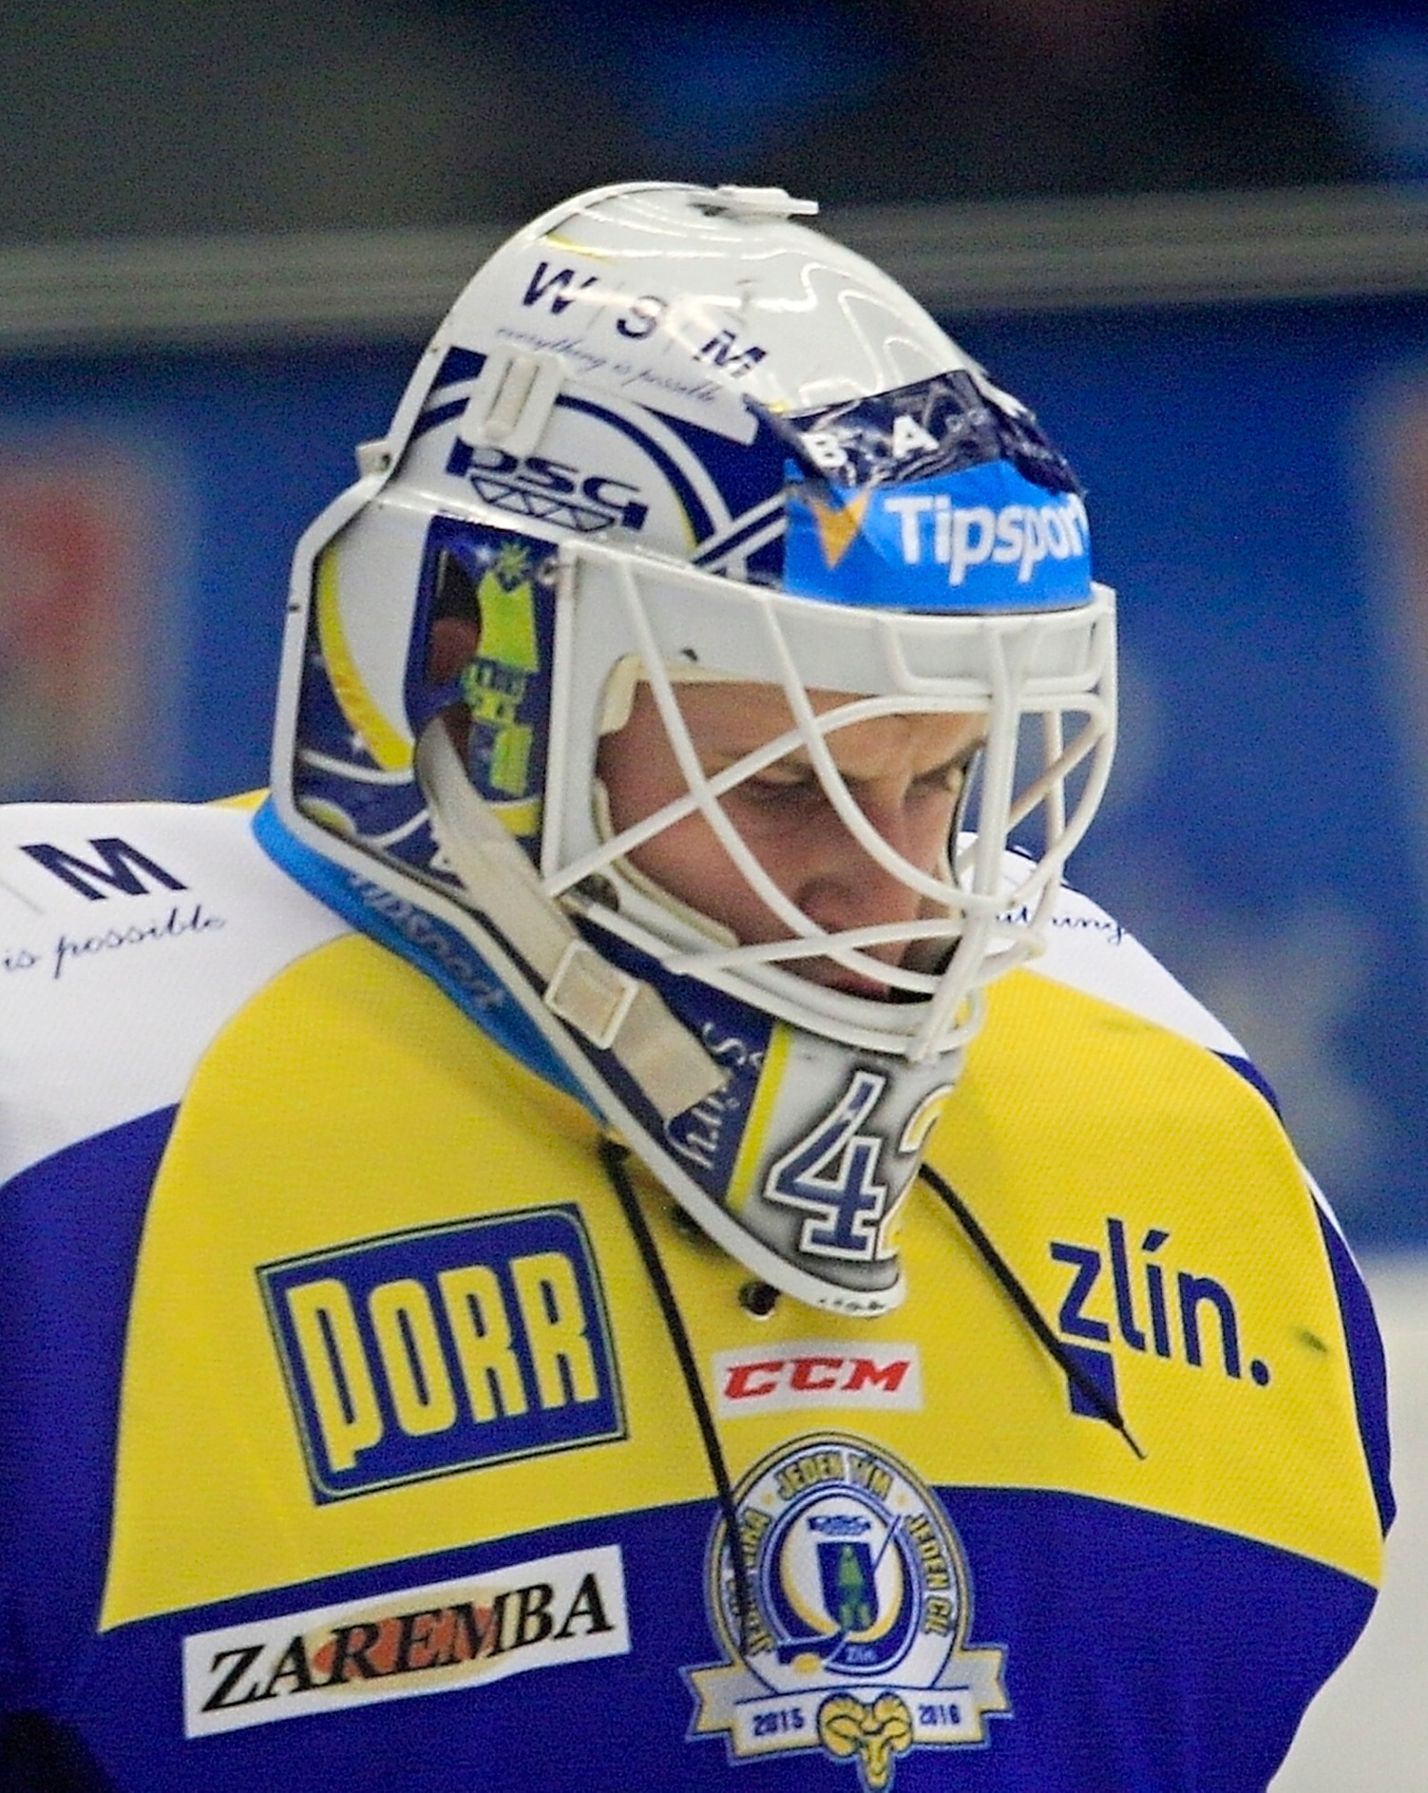 Libor Kašík, PSG Zlín (2015-16)